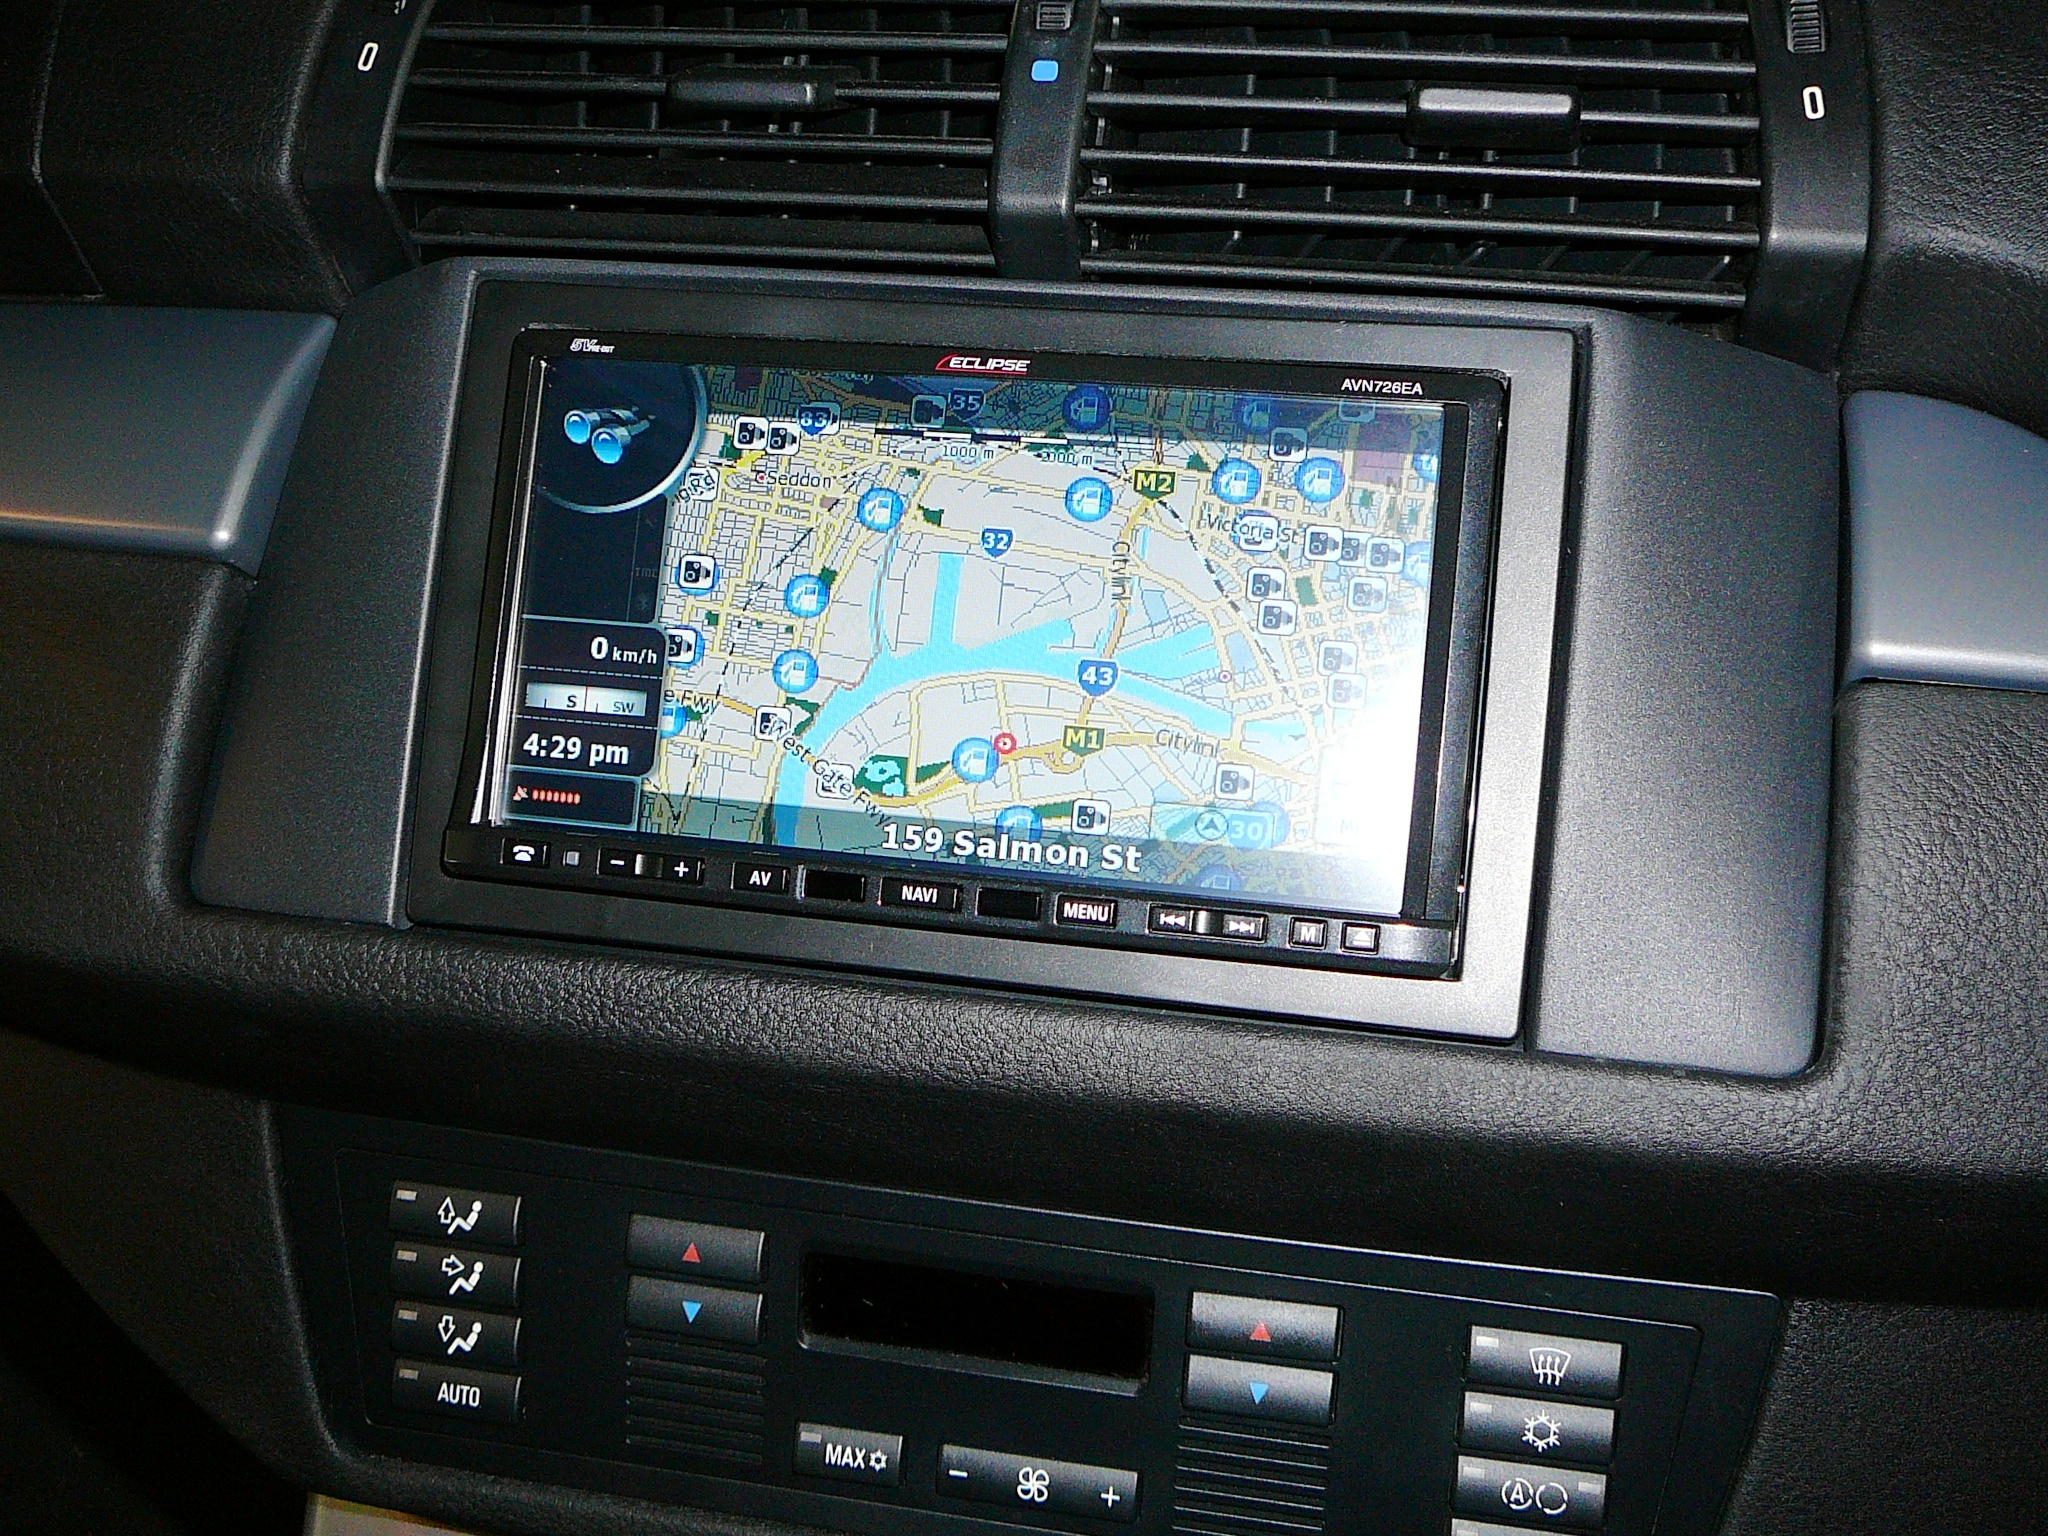 BMW X5 2004, InDash GPS Navigaiton, iPhone, USB, Bluetooth Handsfree, Reverse Camera, Custom Sub Box encloser